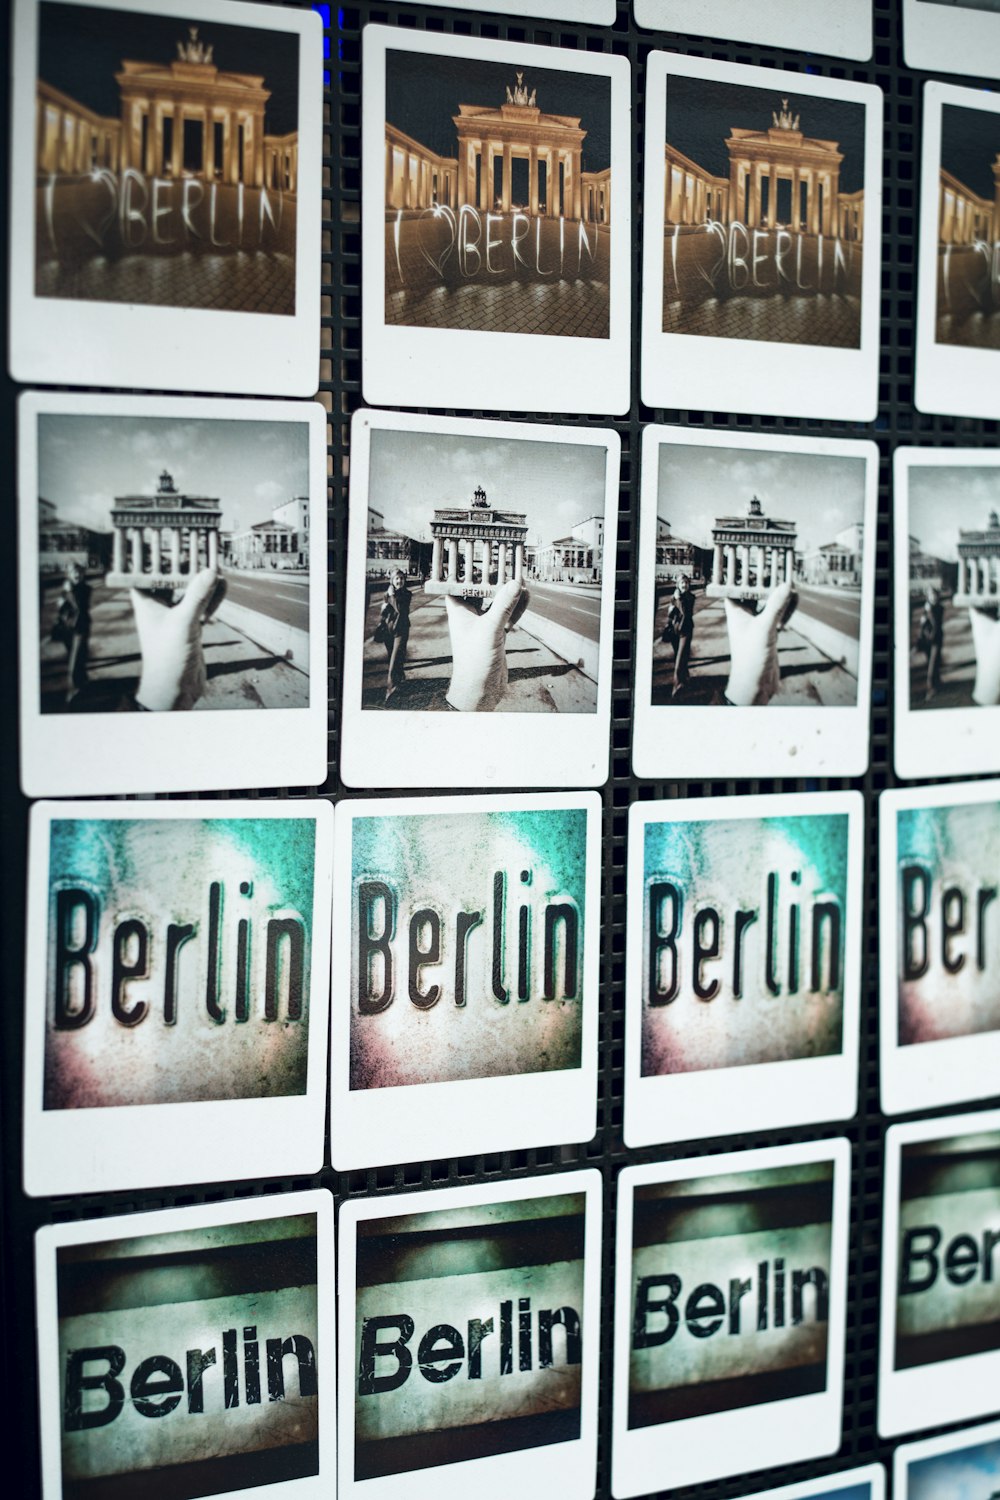 Berlin photos